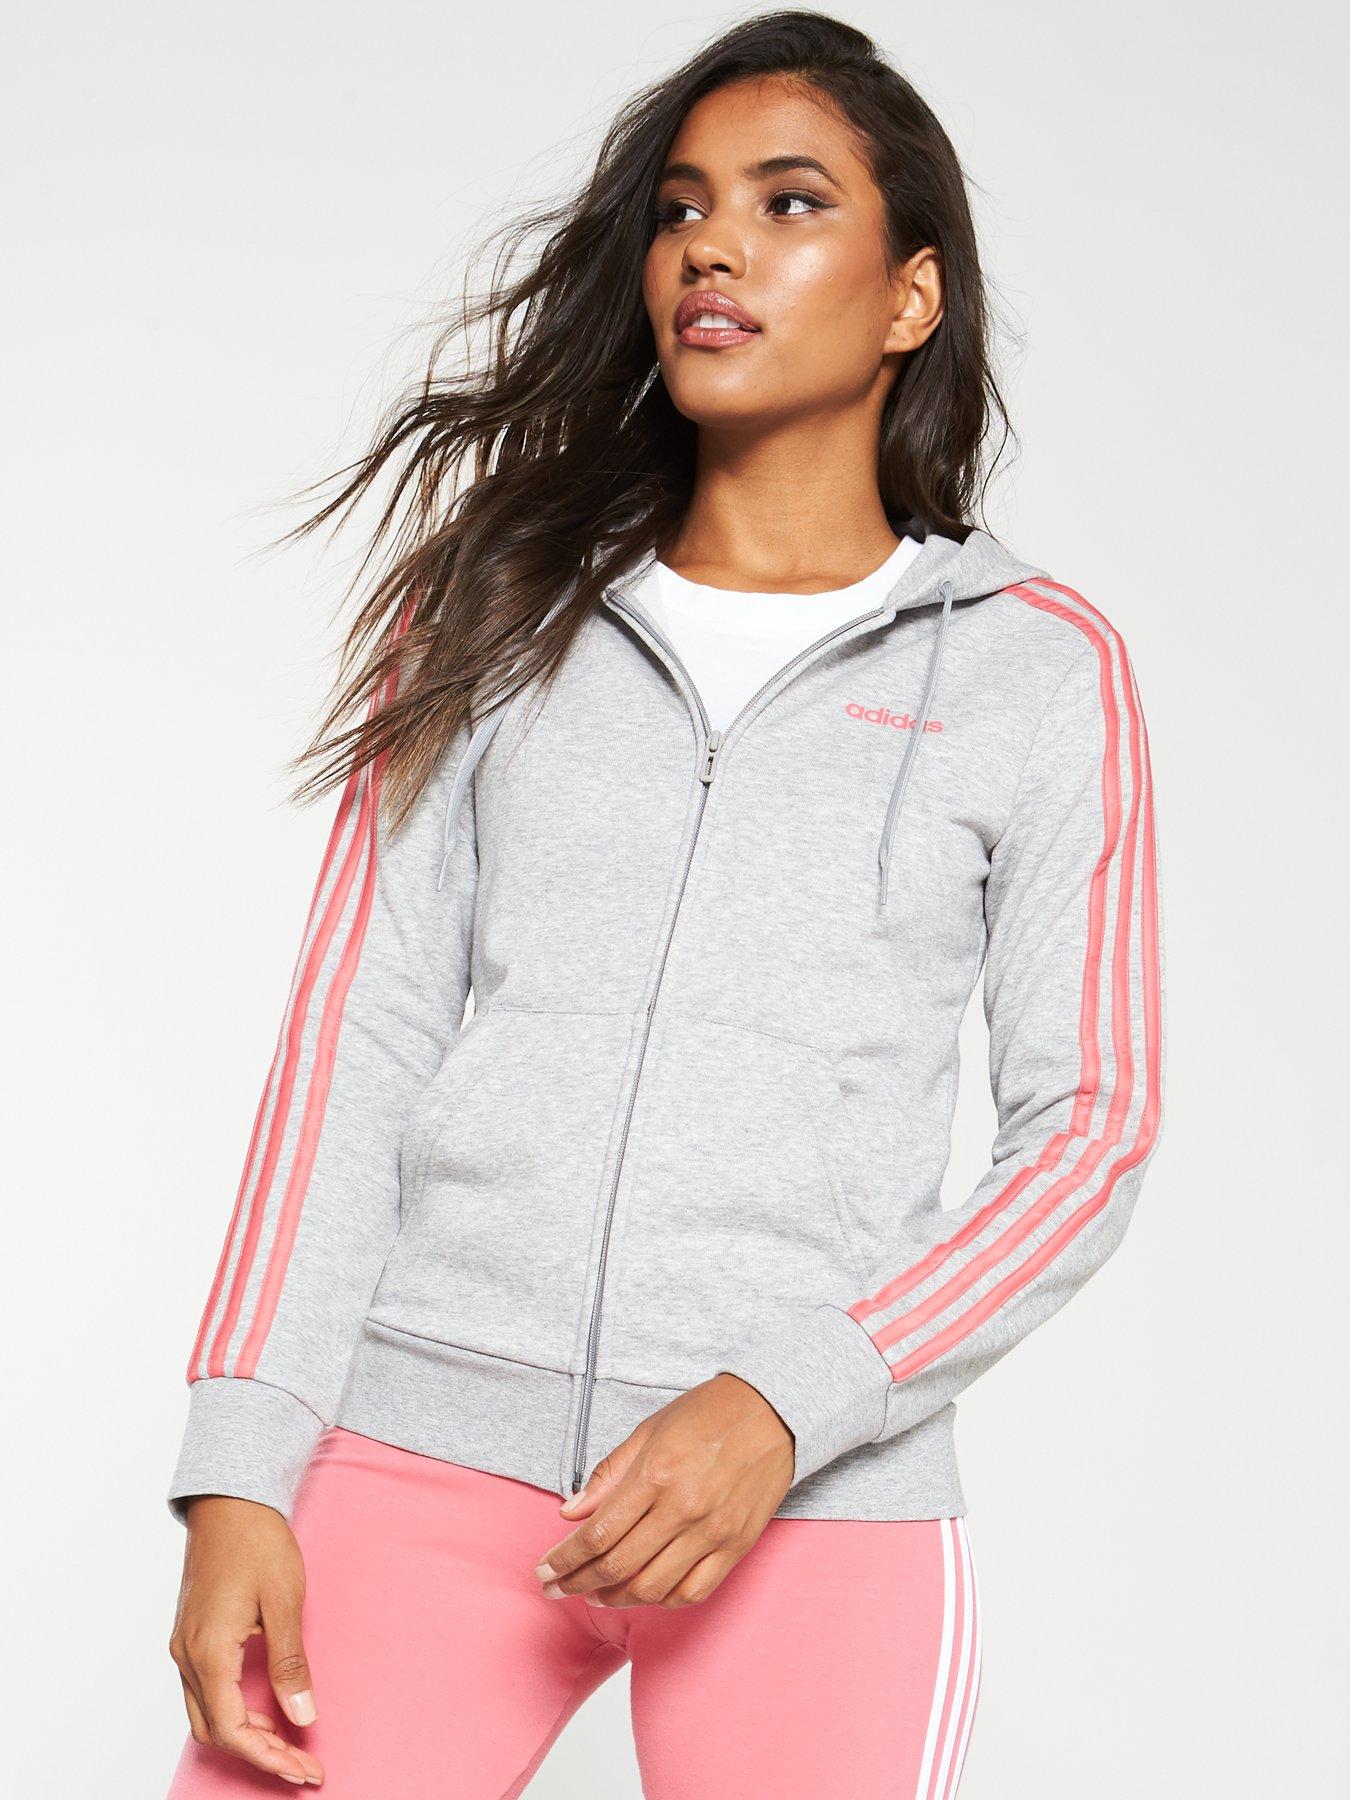 grey and pink adidas hoodie